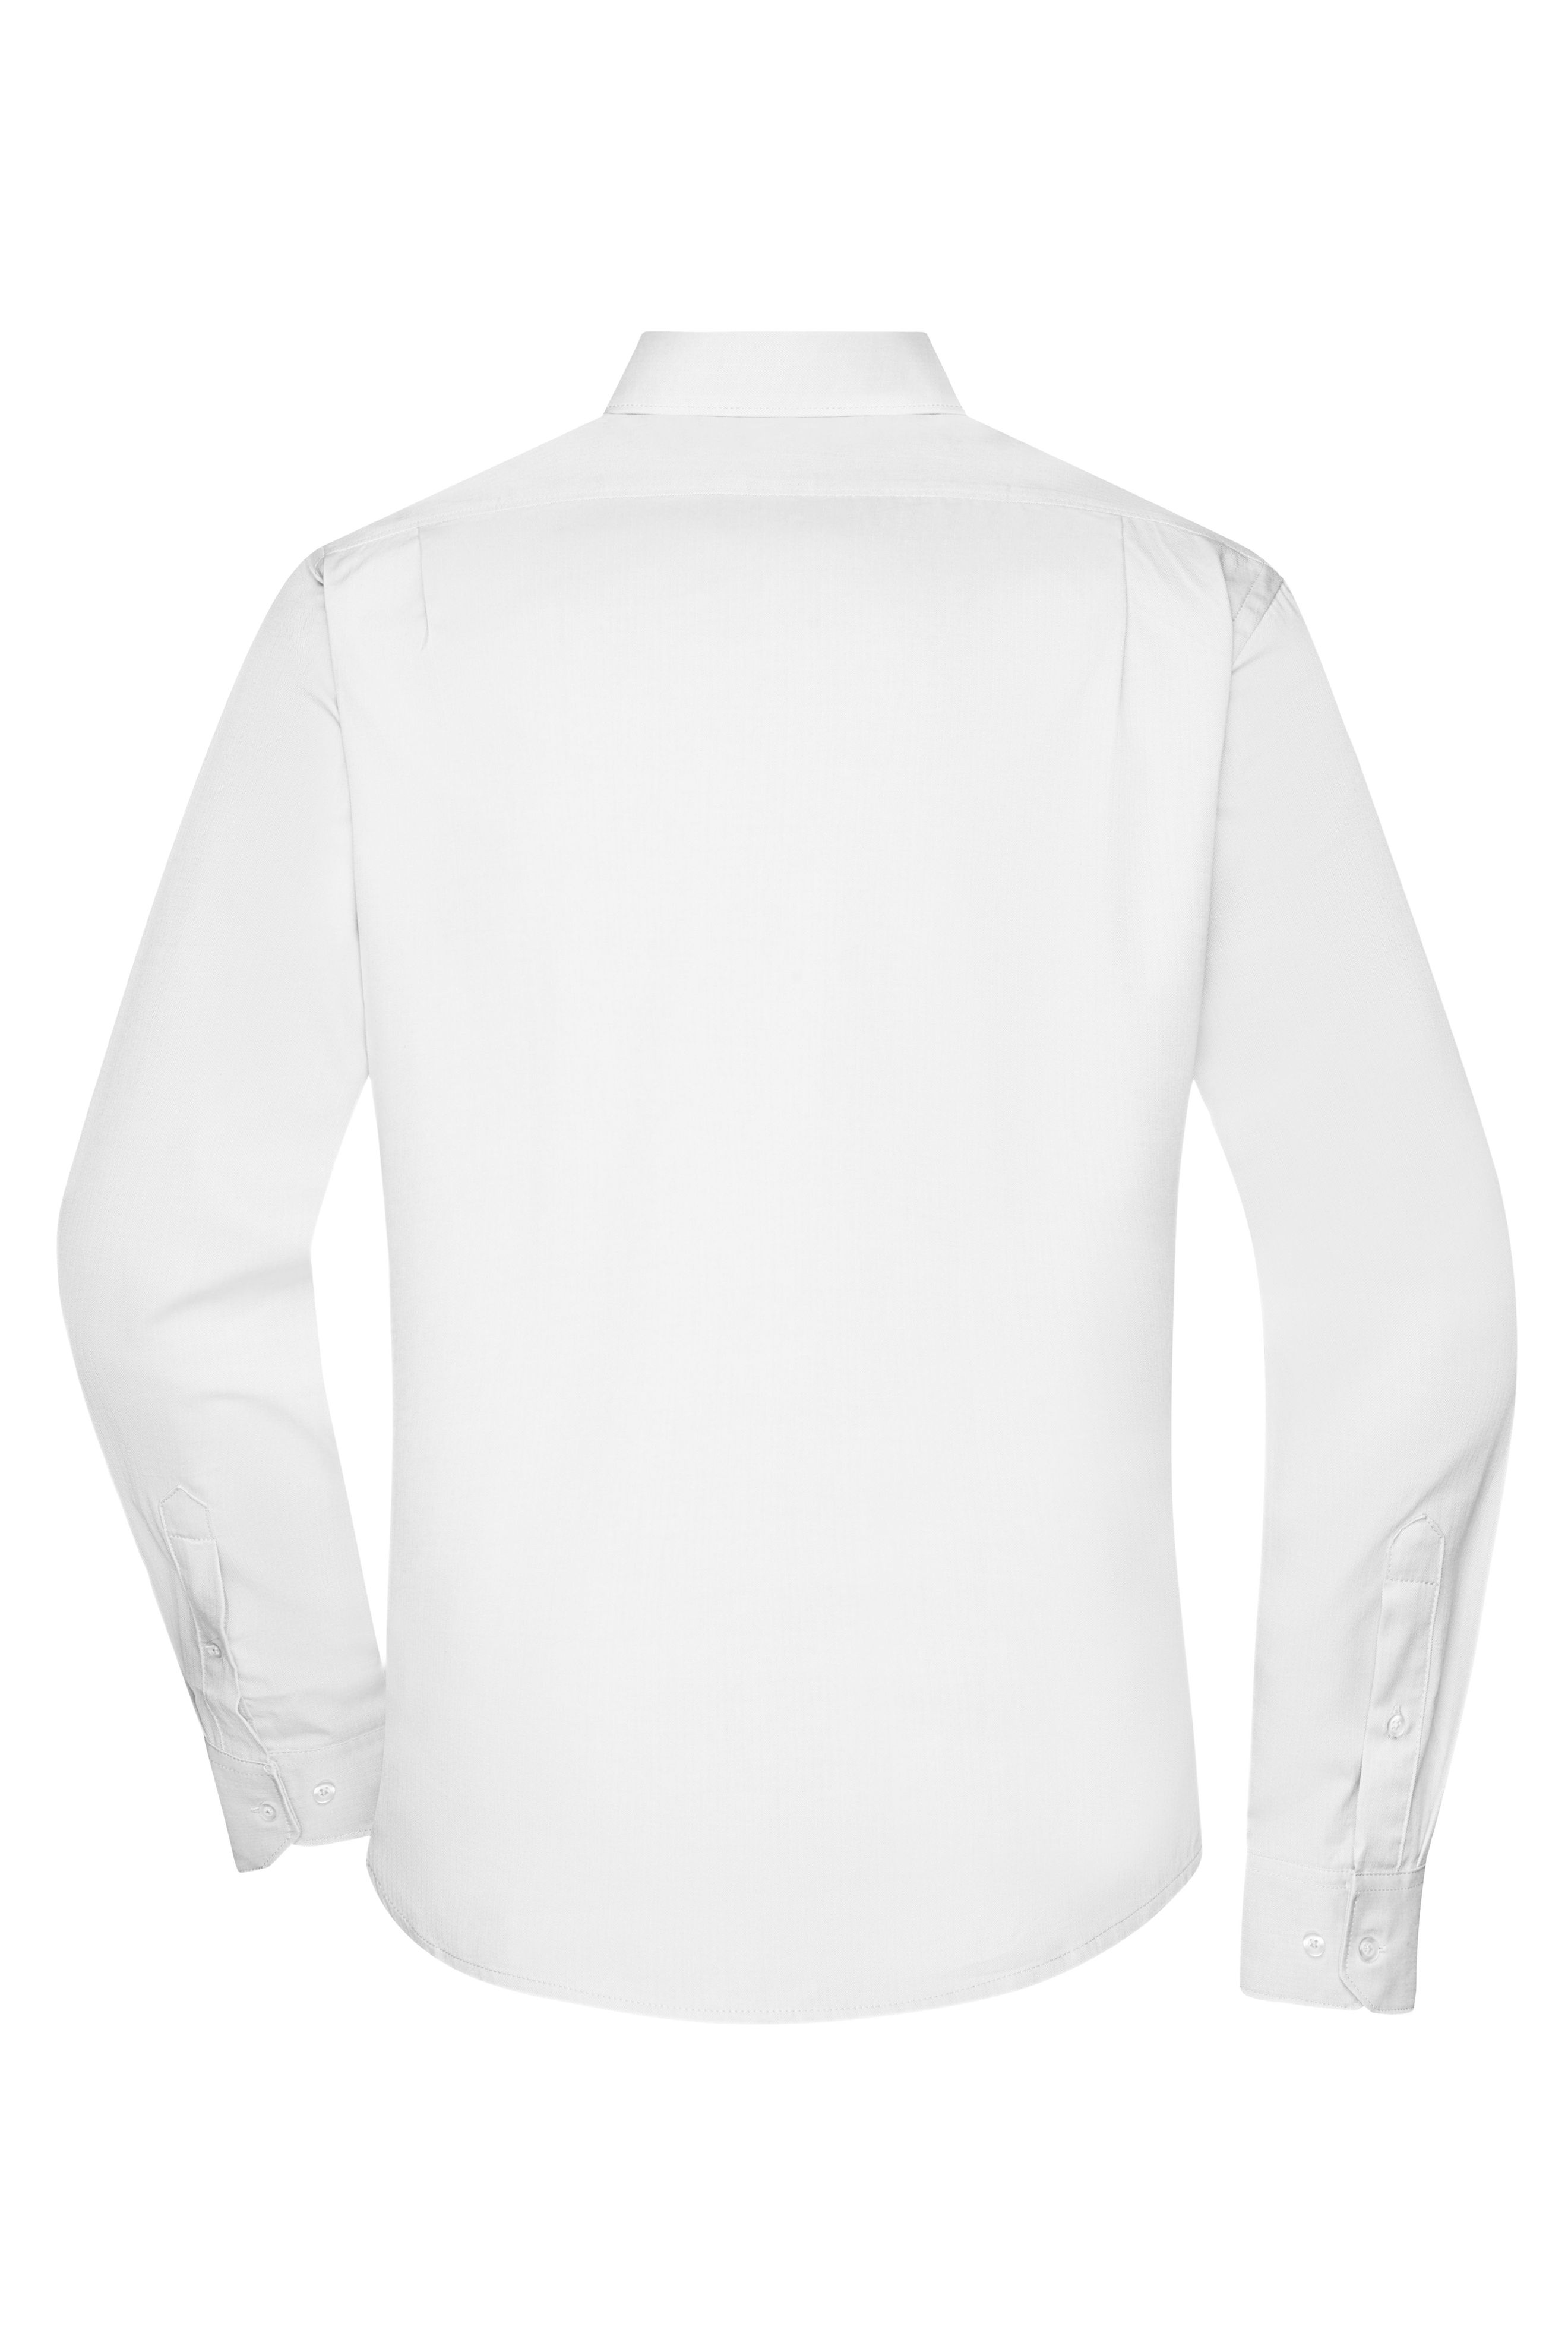 Men's Shirt Longsleeve Herringbone JN690 Klassisches Shirt aus pflegeleichter Mischqualität